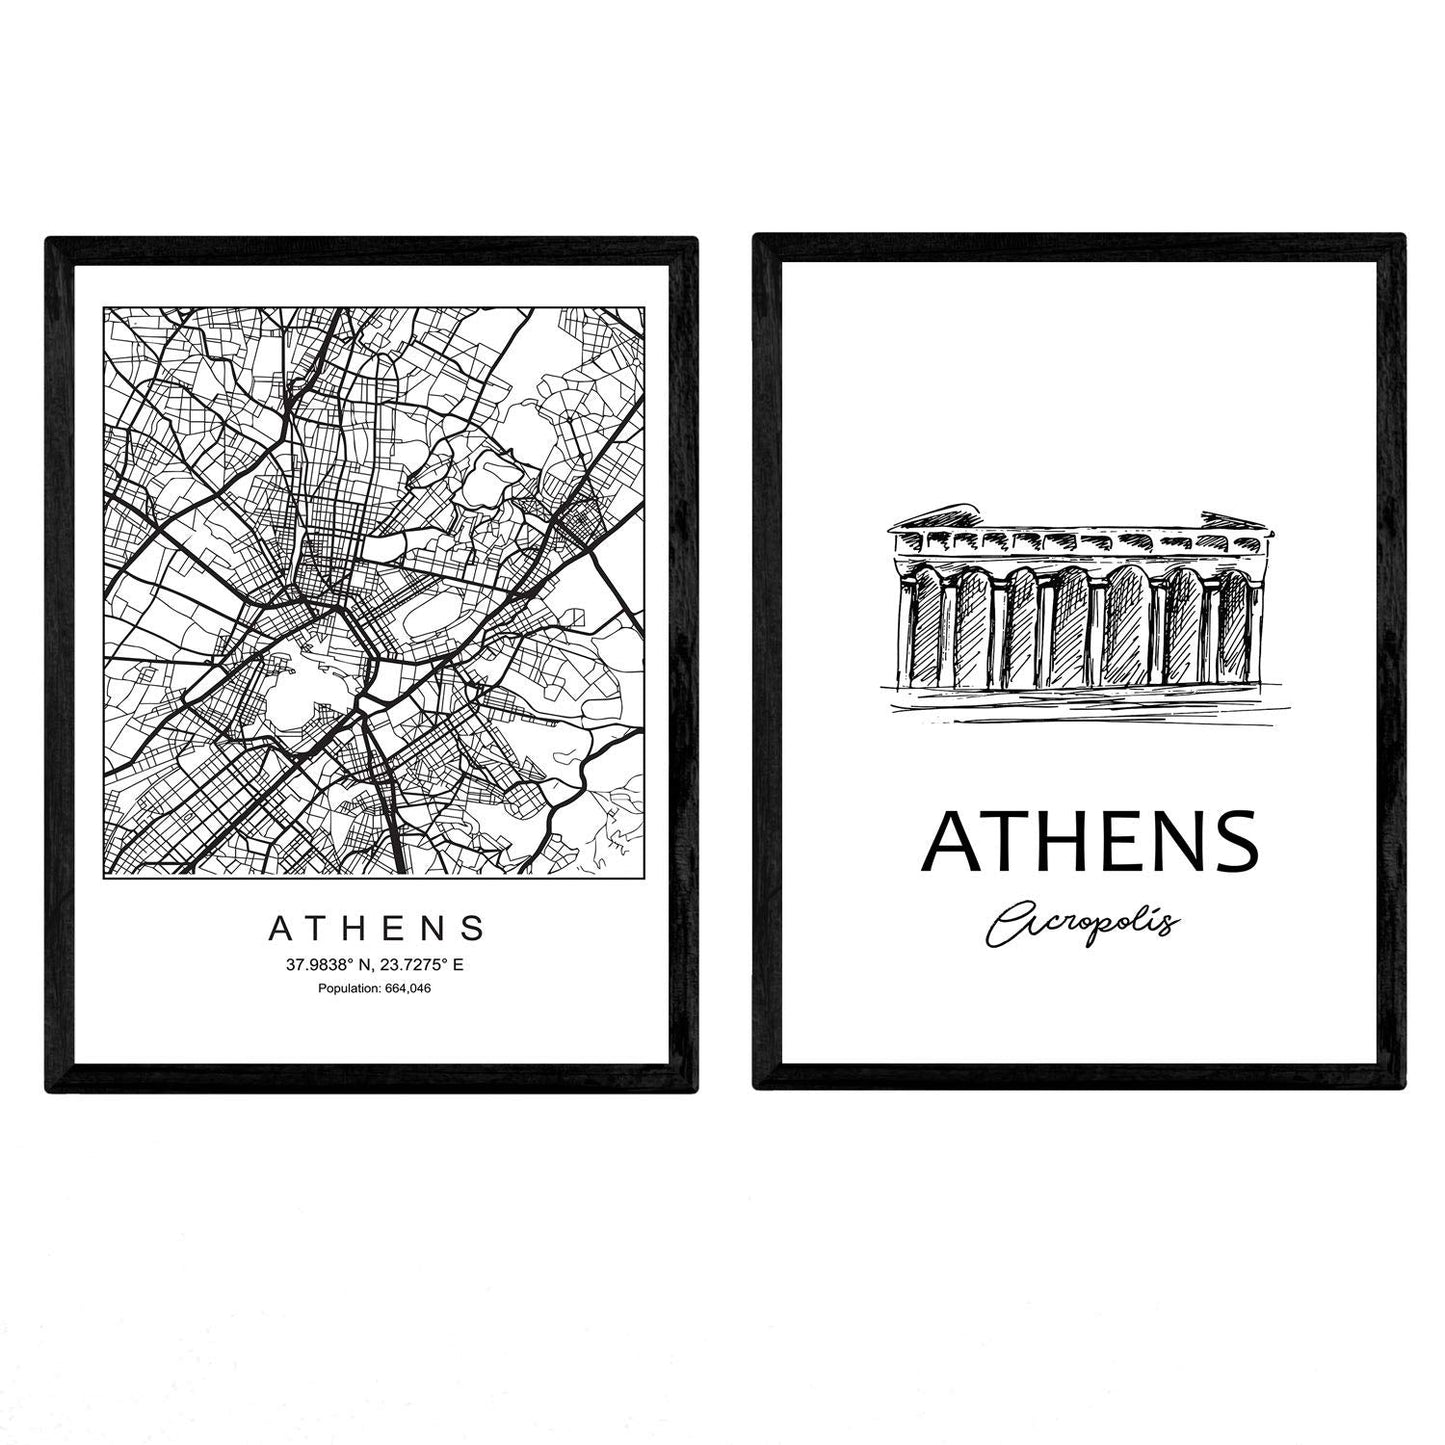 Pack de posters de Atenas - Acropolis. Láminas con monumentos de ciudades.-Artwork-Nacnic-Nacnic Estudio SL